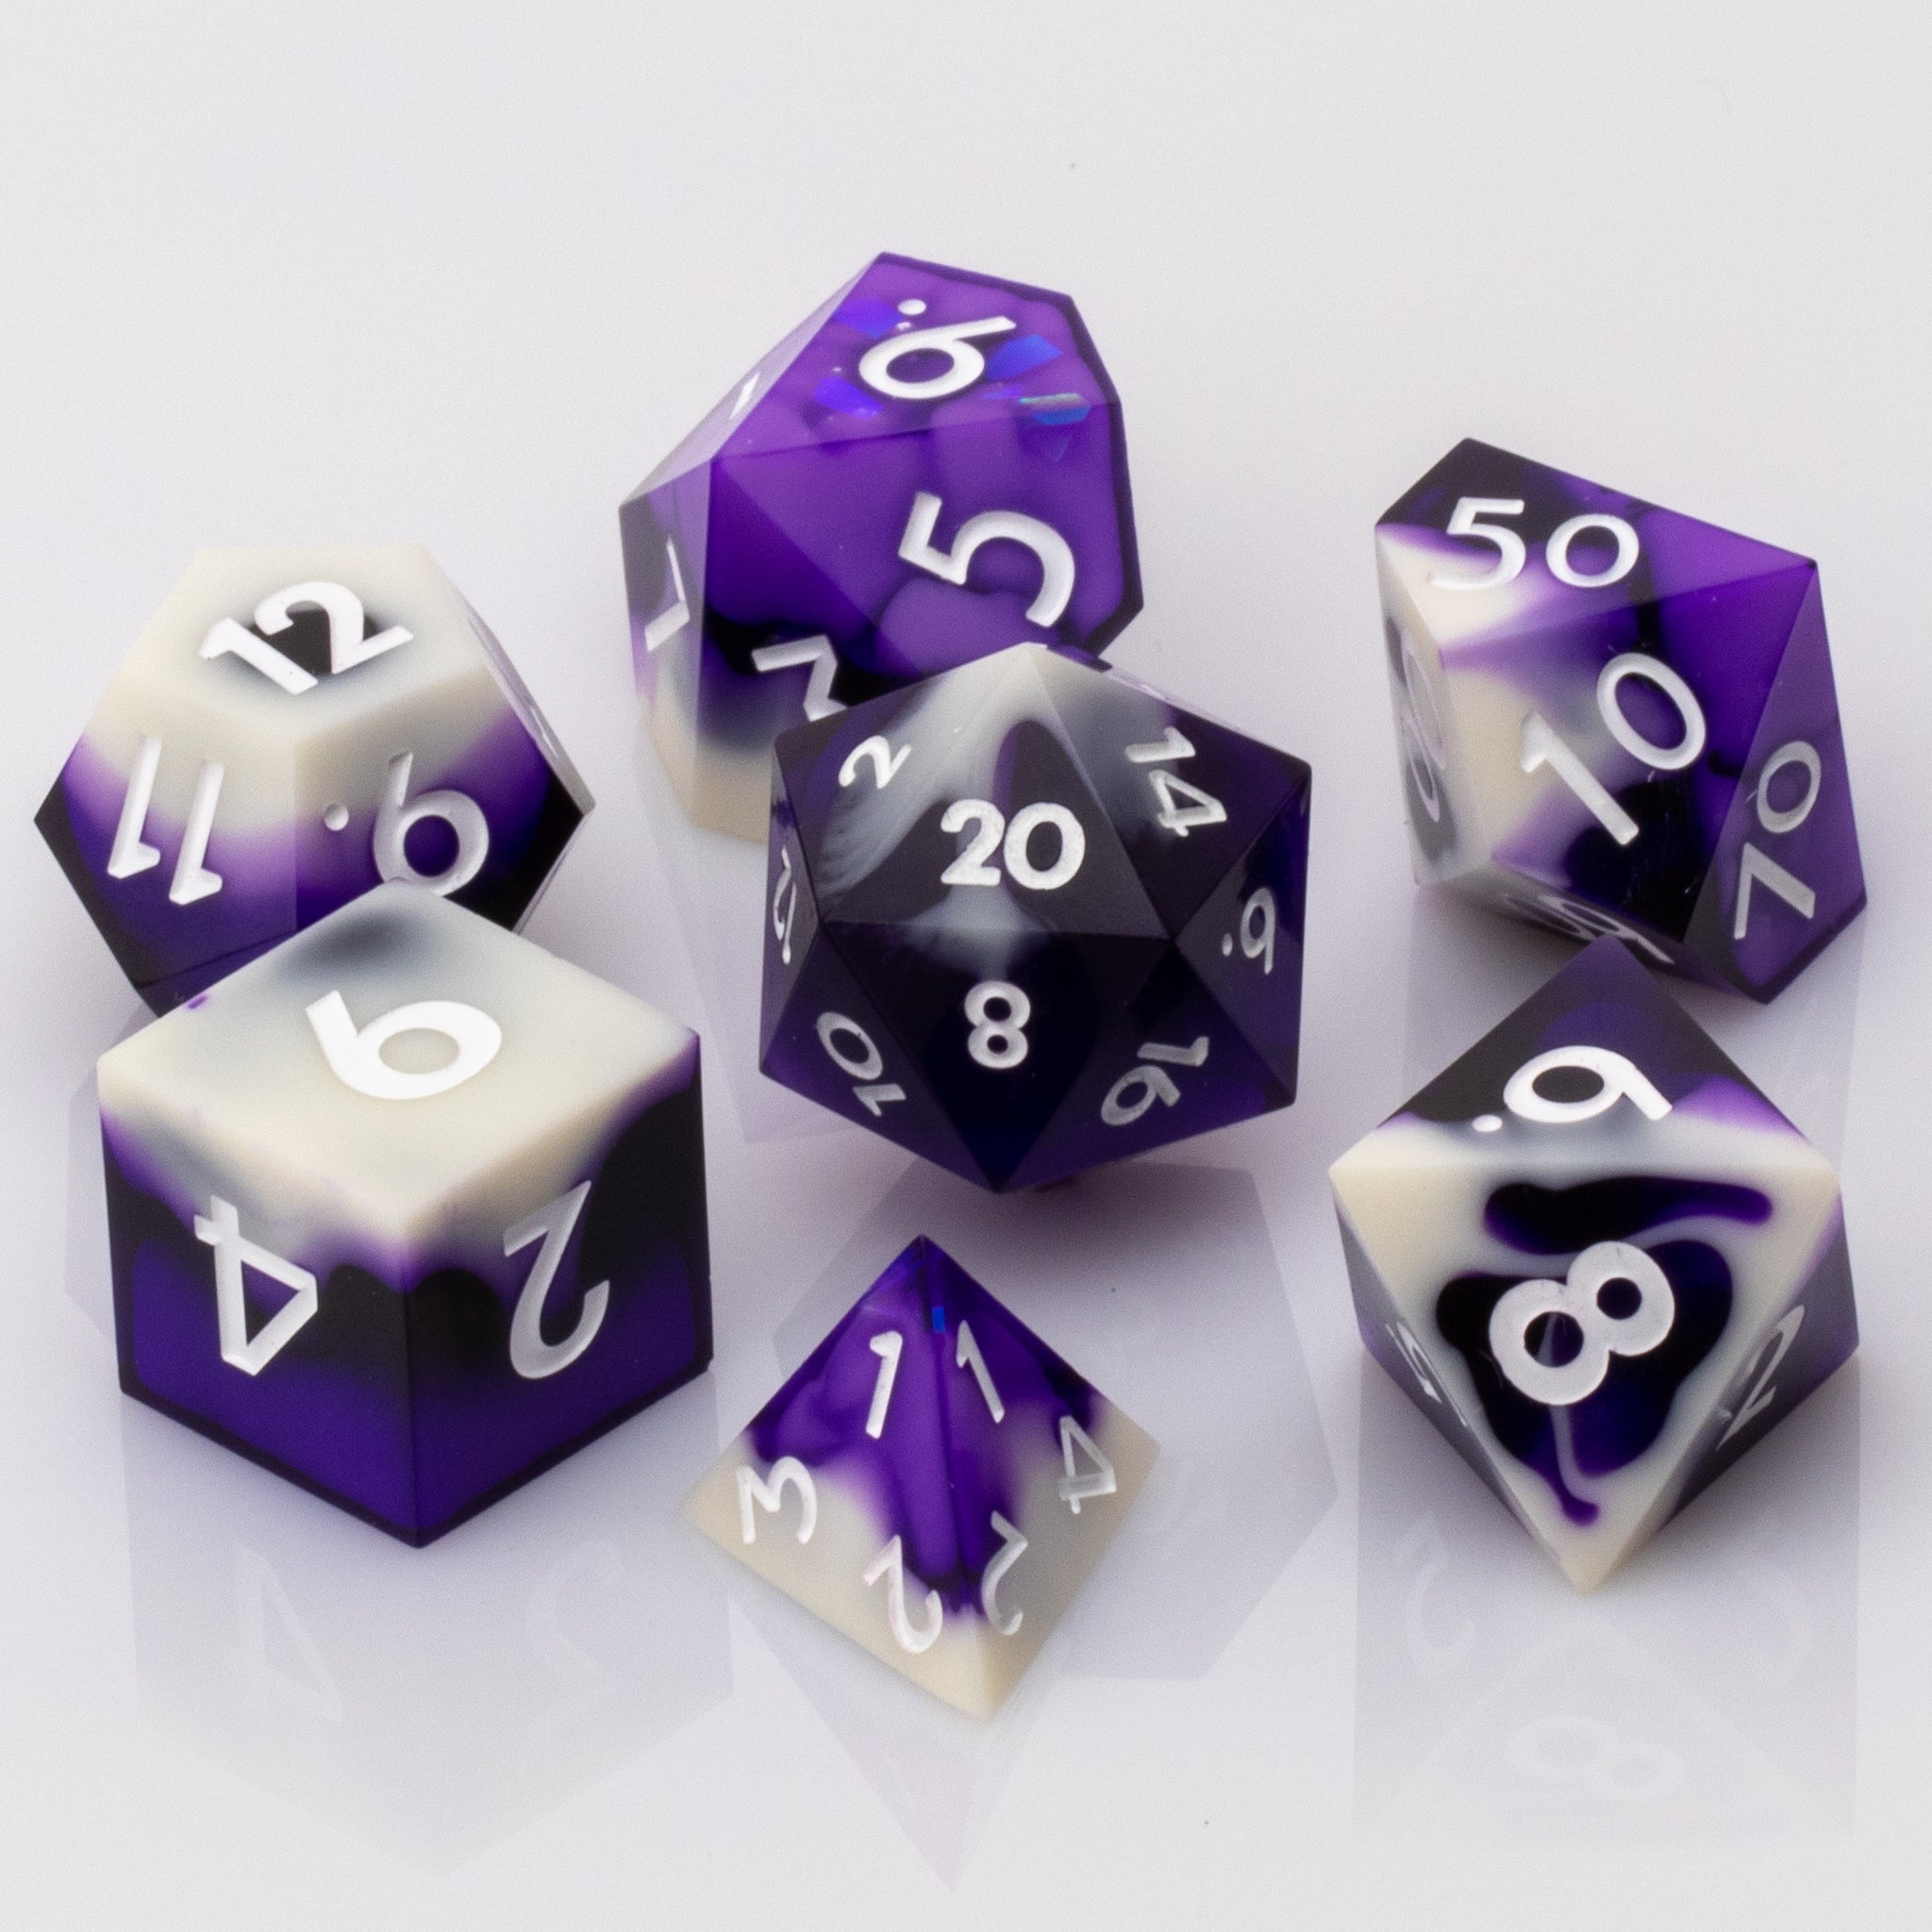 Nightfall, purple and white handmade DND dice set on a white background.